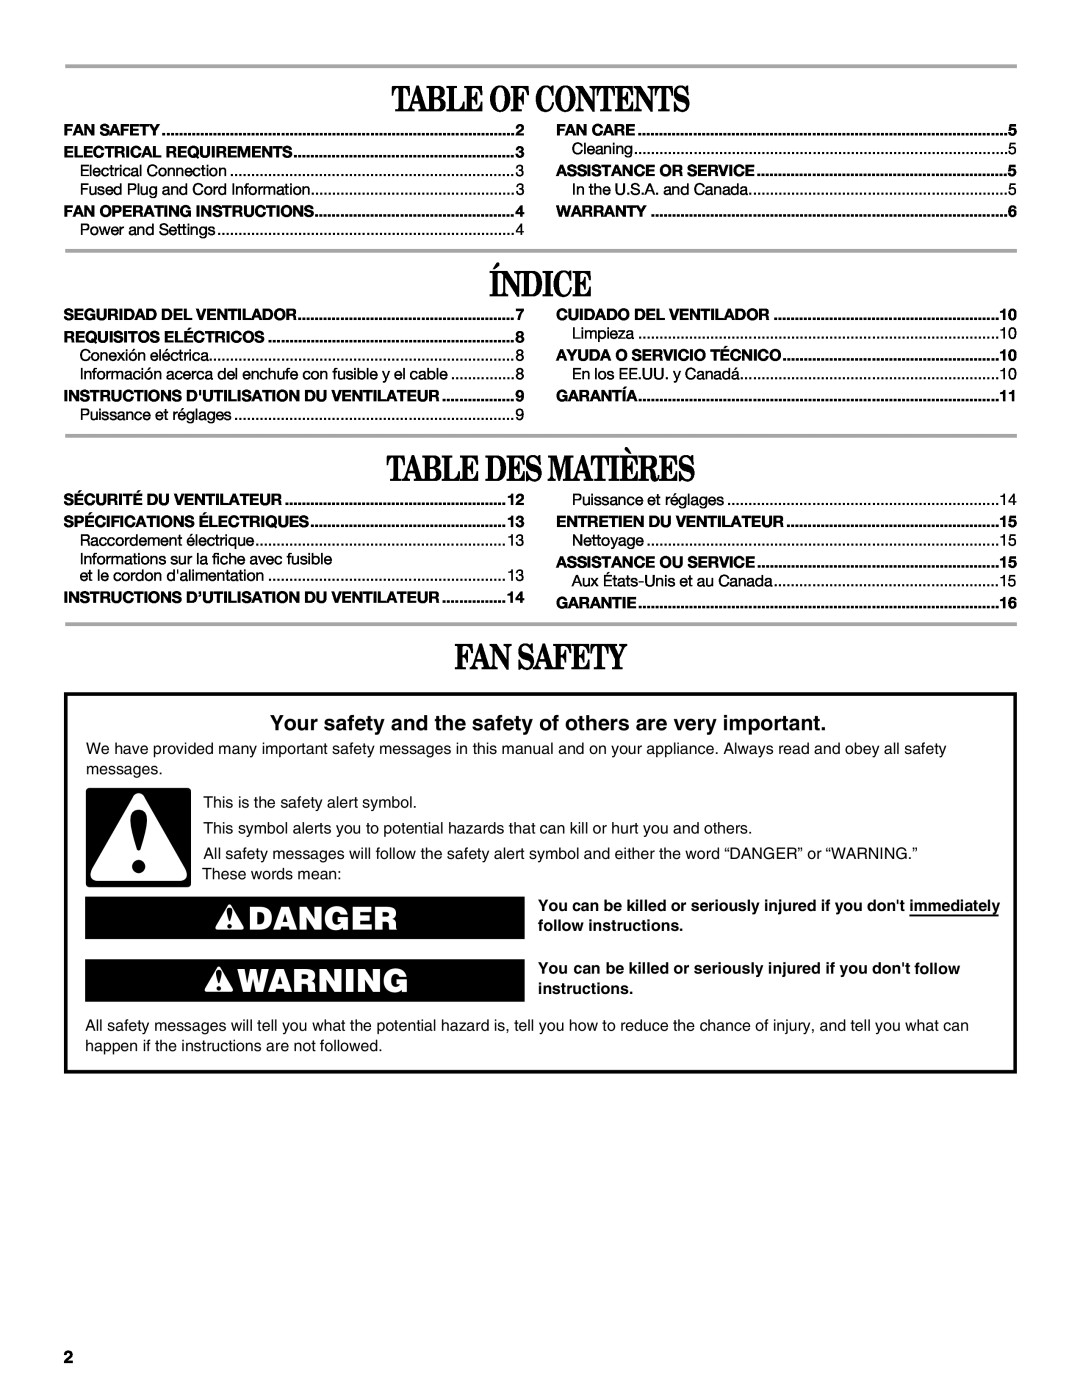 Whirlpool WF4235ER1 manual Table Of Contents, Índice, Table Des Matières, Fan Safety, Danger 